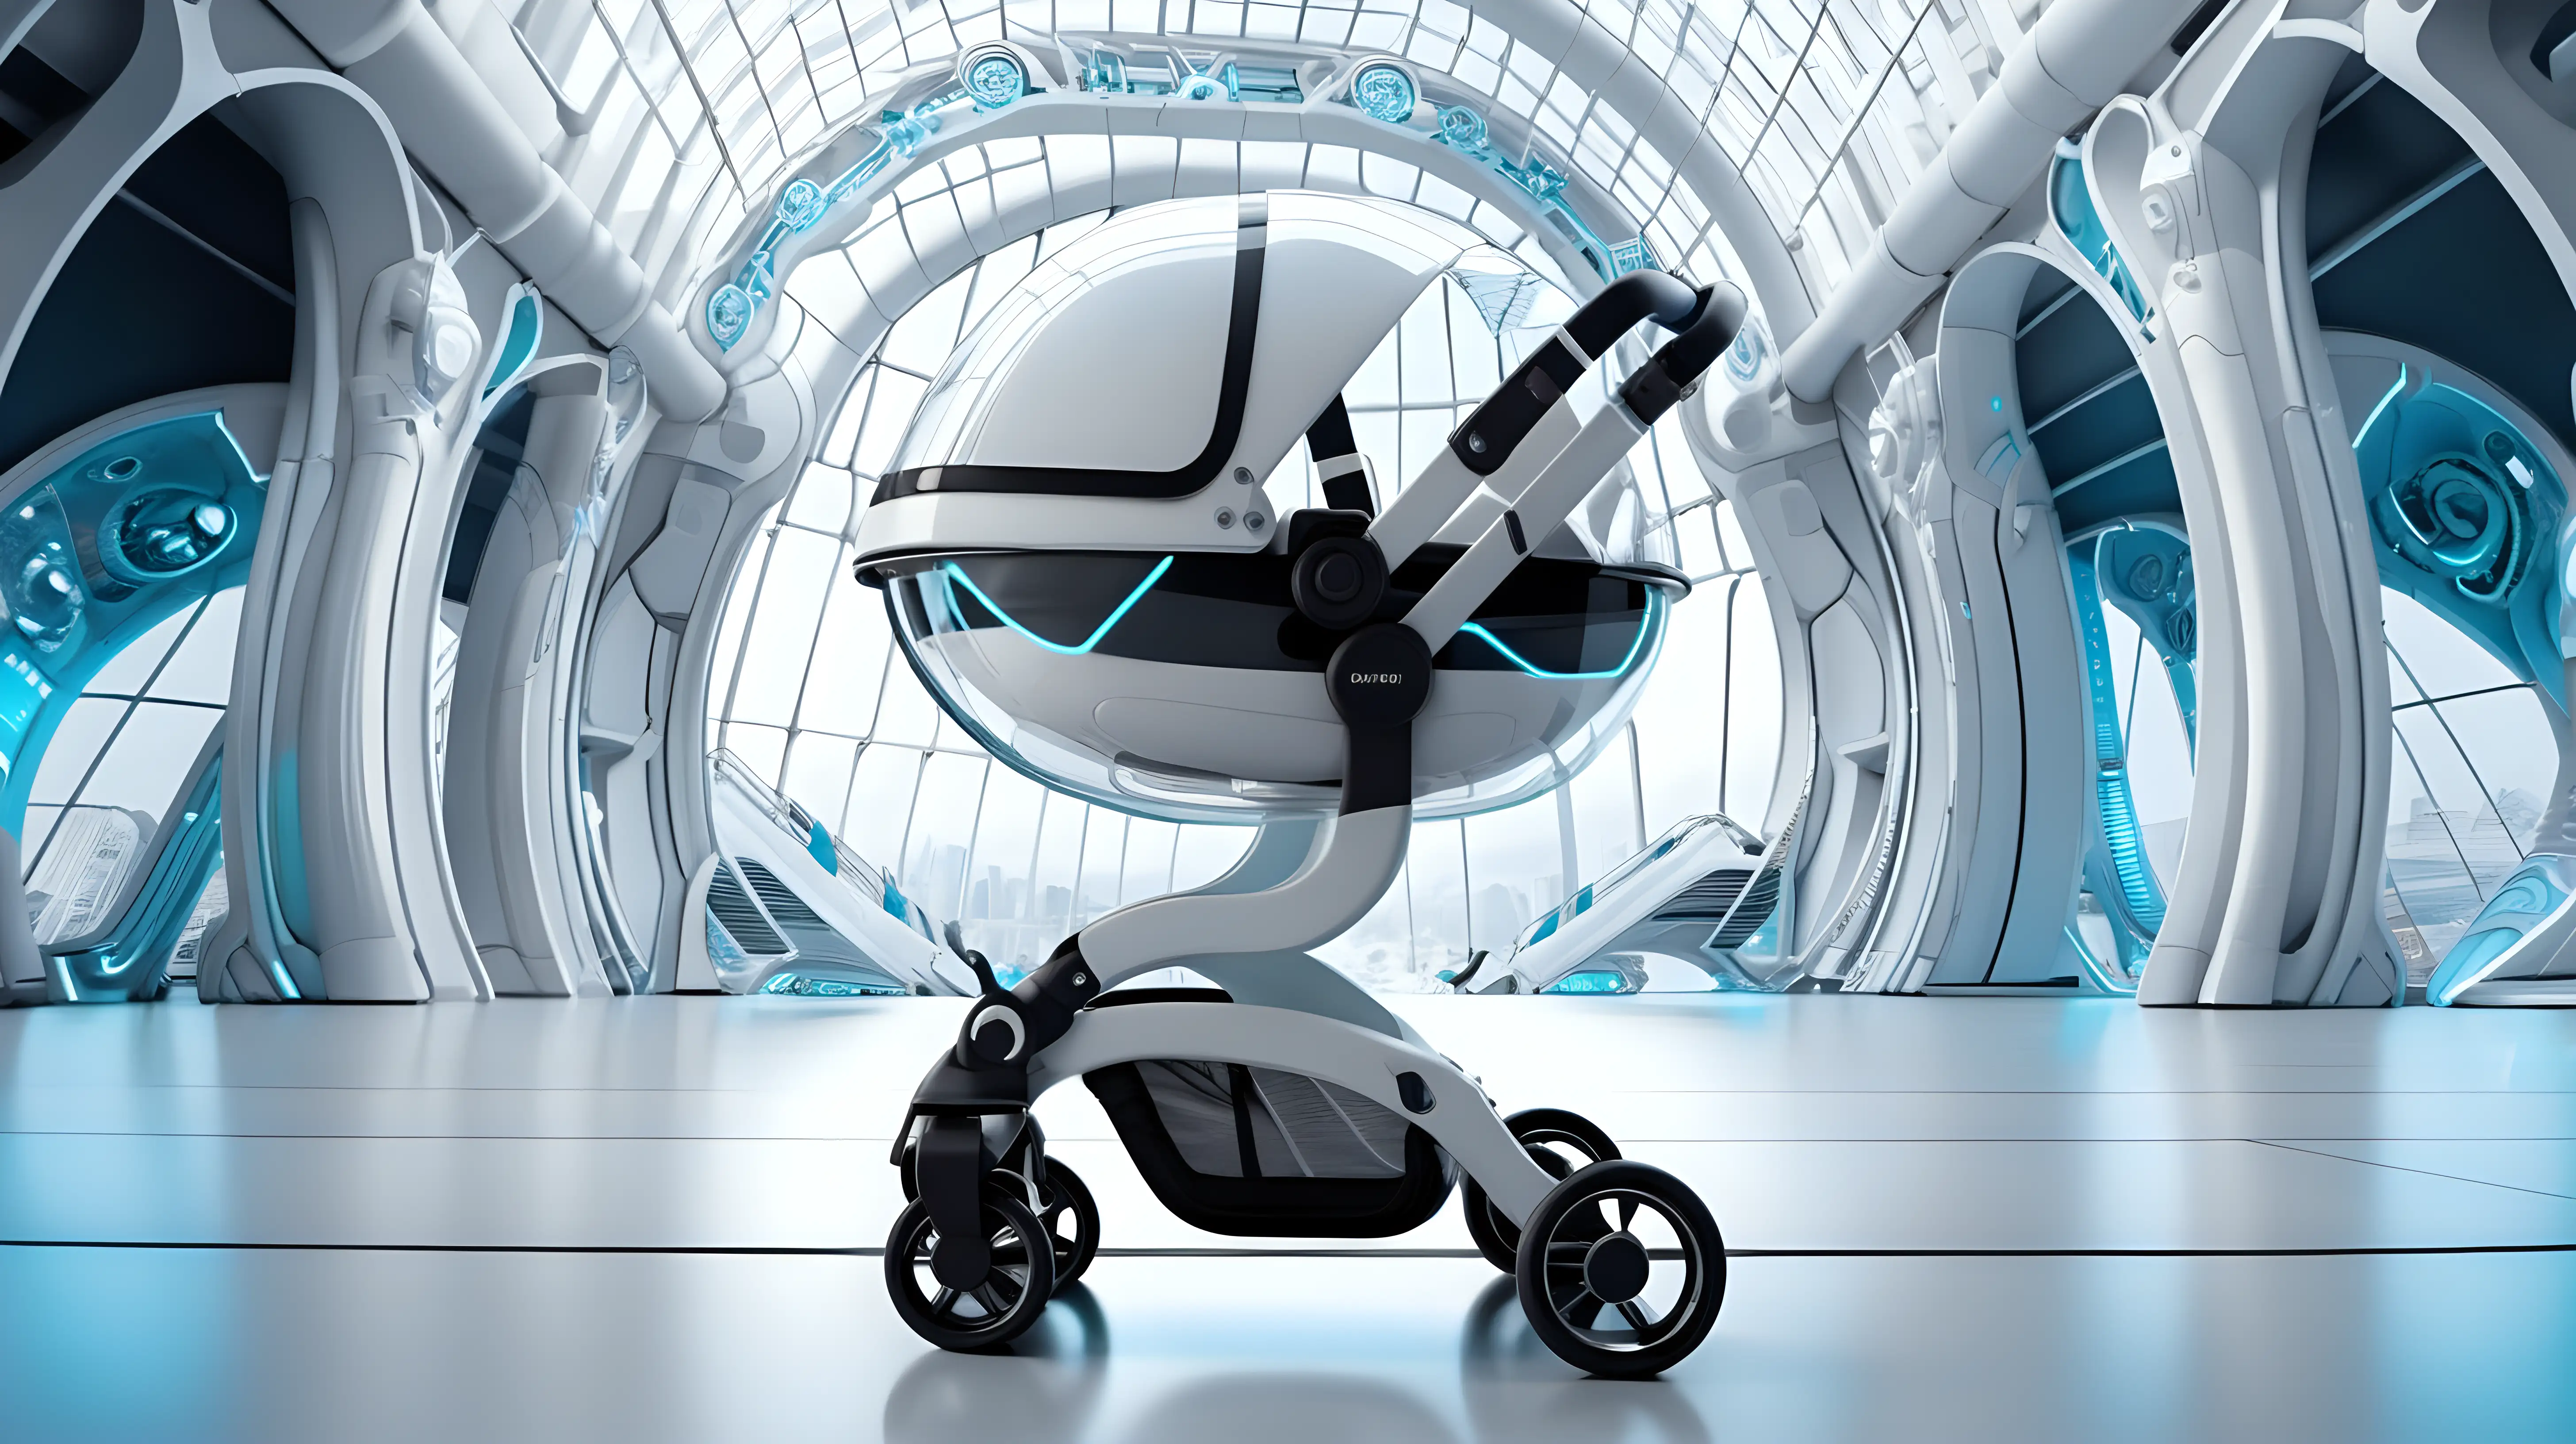 Futuristic Stroller in a Modern Architectural Setting